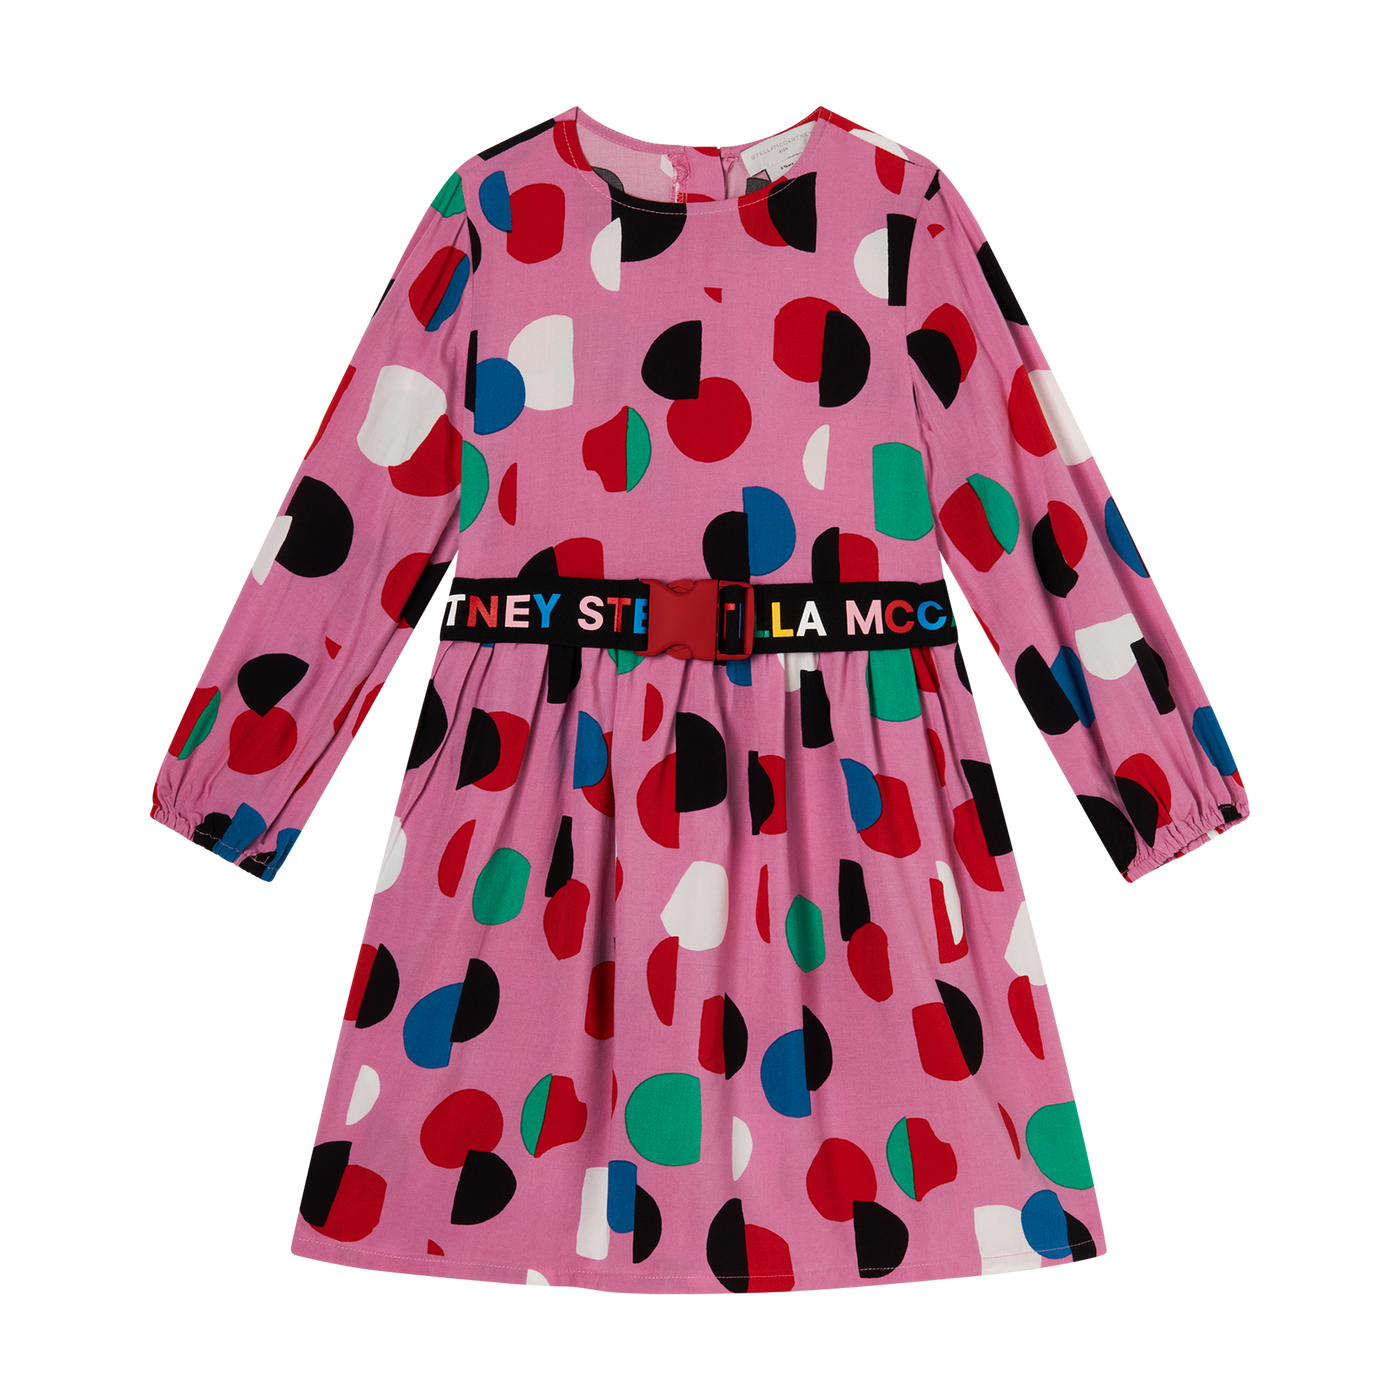 Stella McCartney Kids - Pink Dots Dress